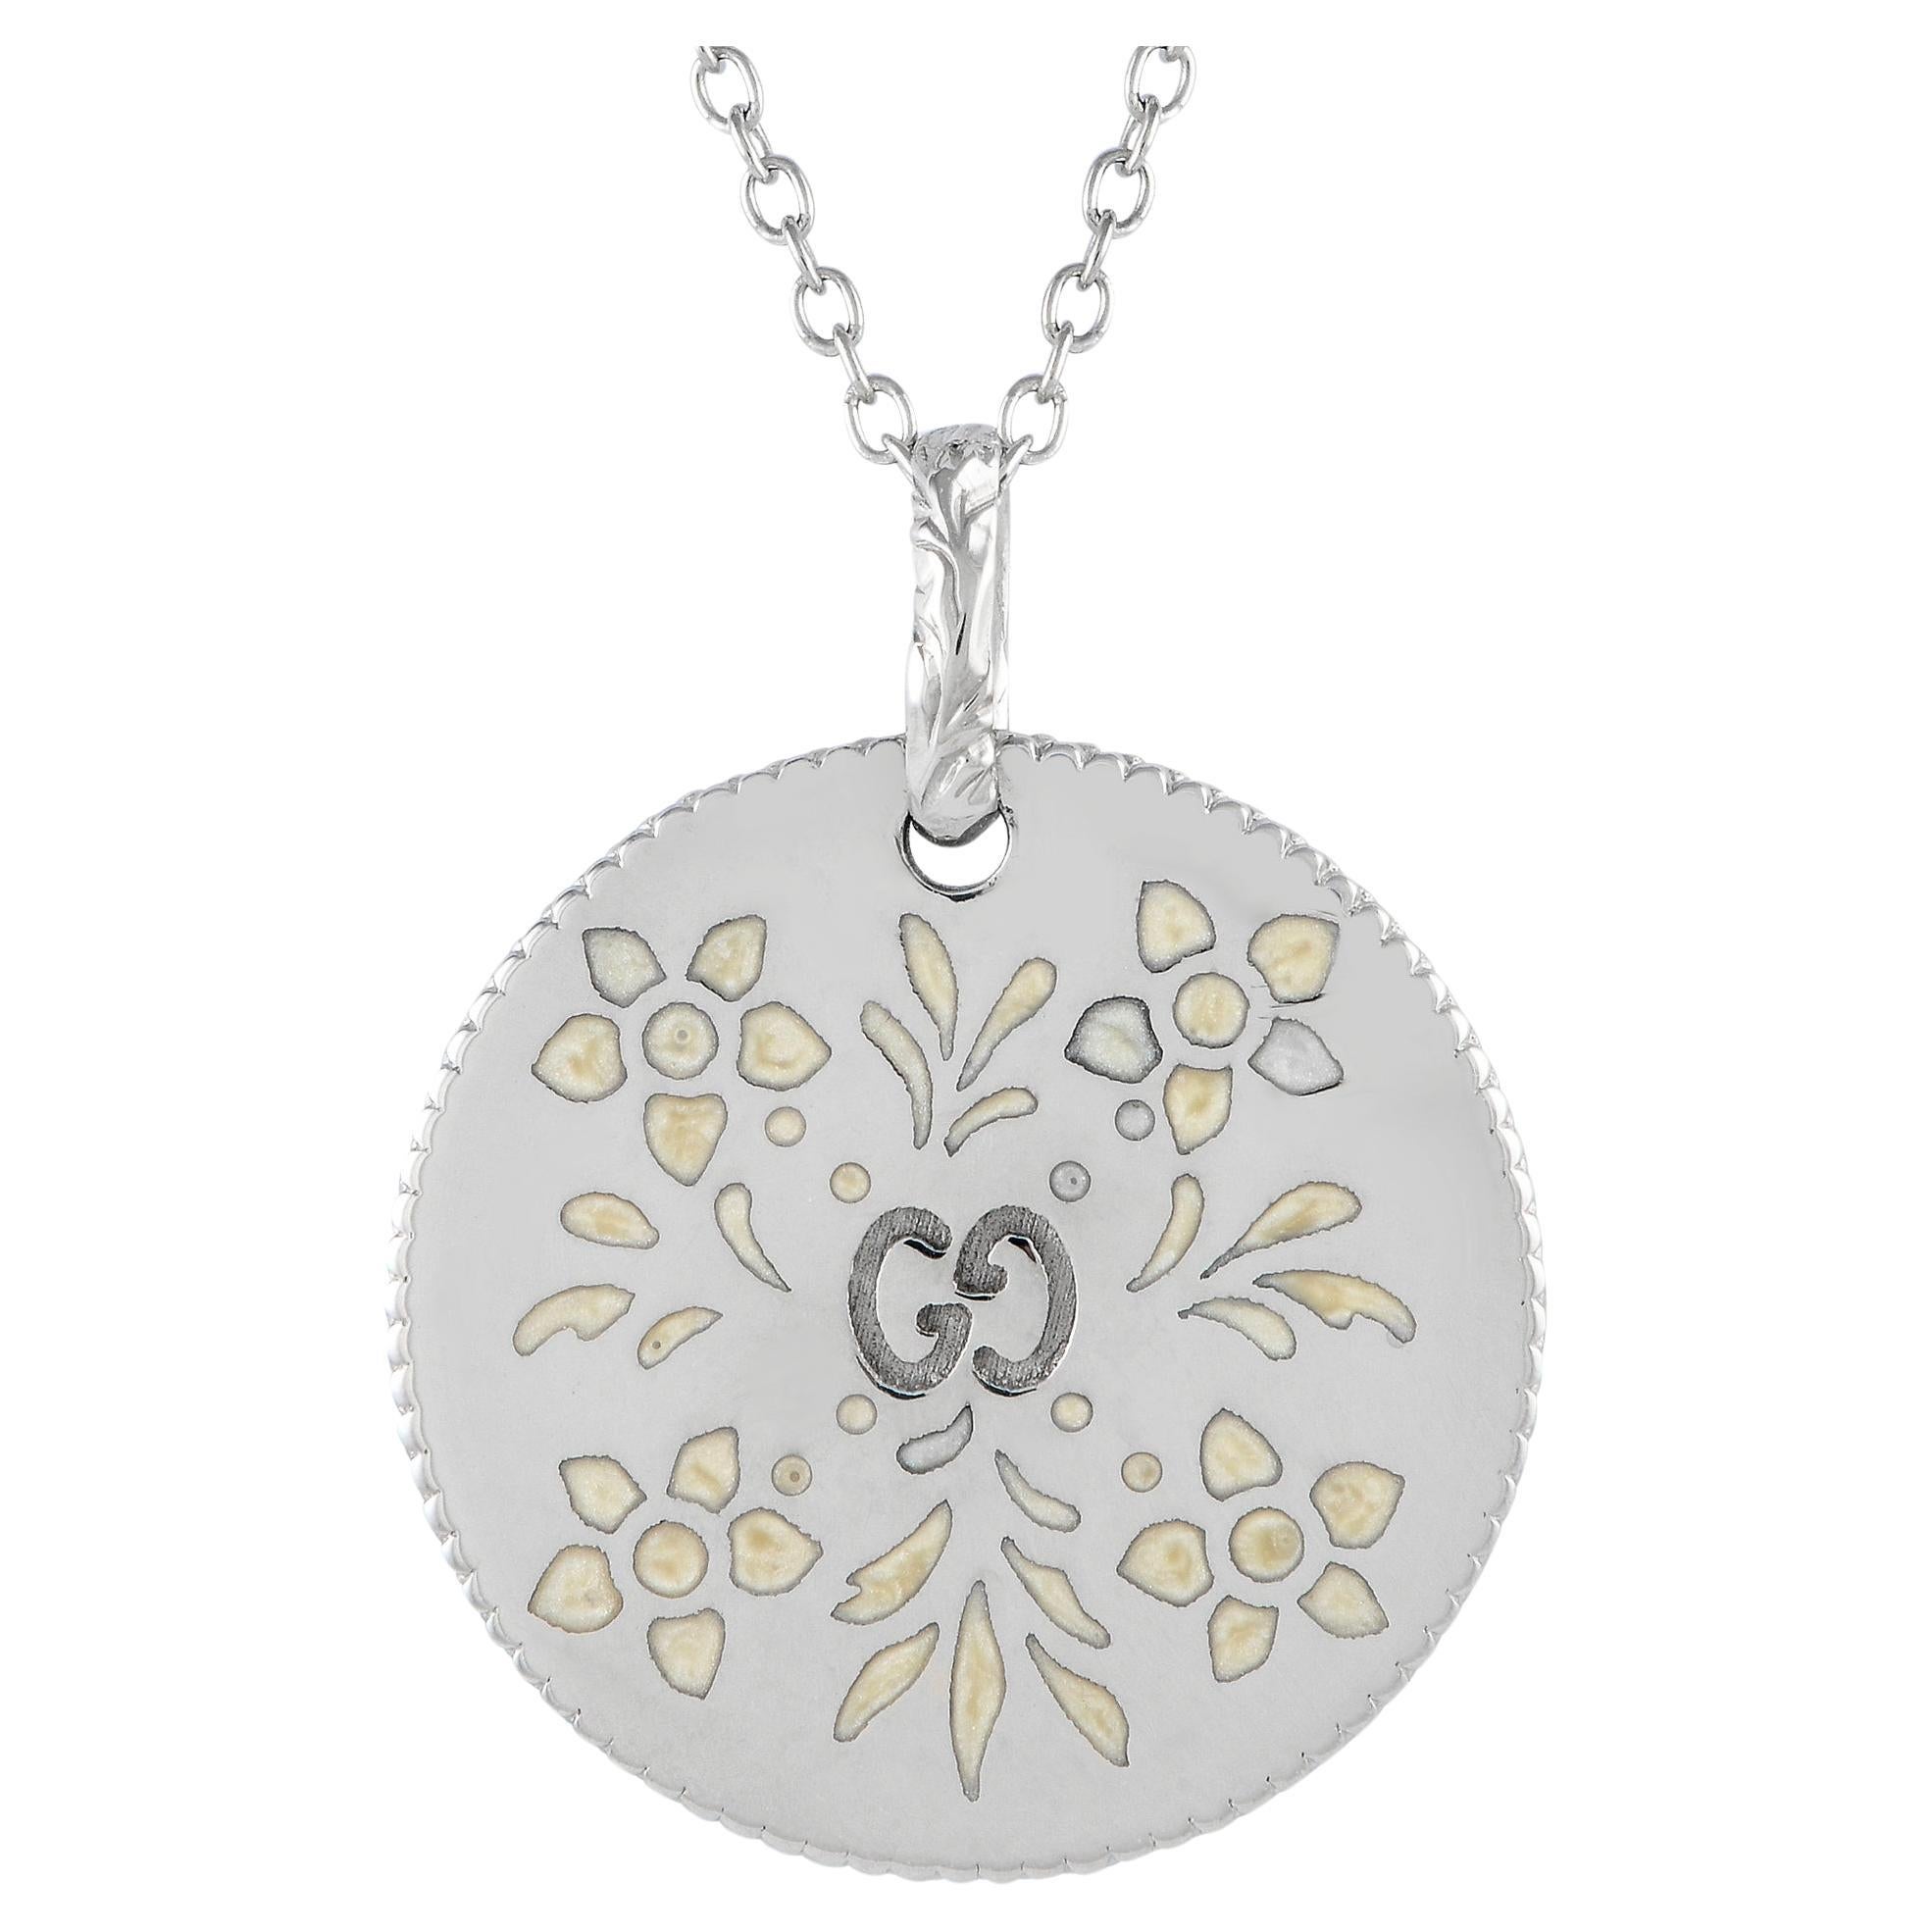 Gucci 18K White Gold Pendant Necklace 